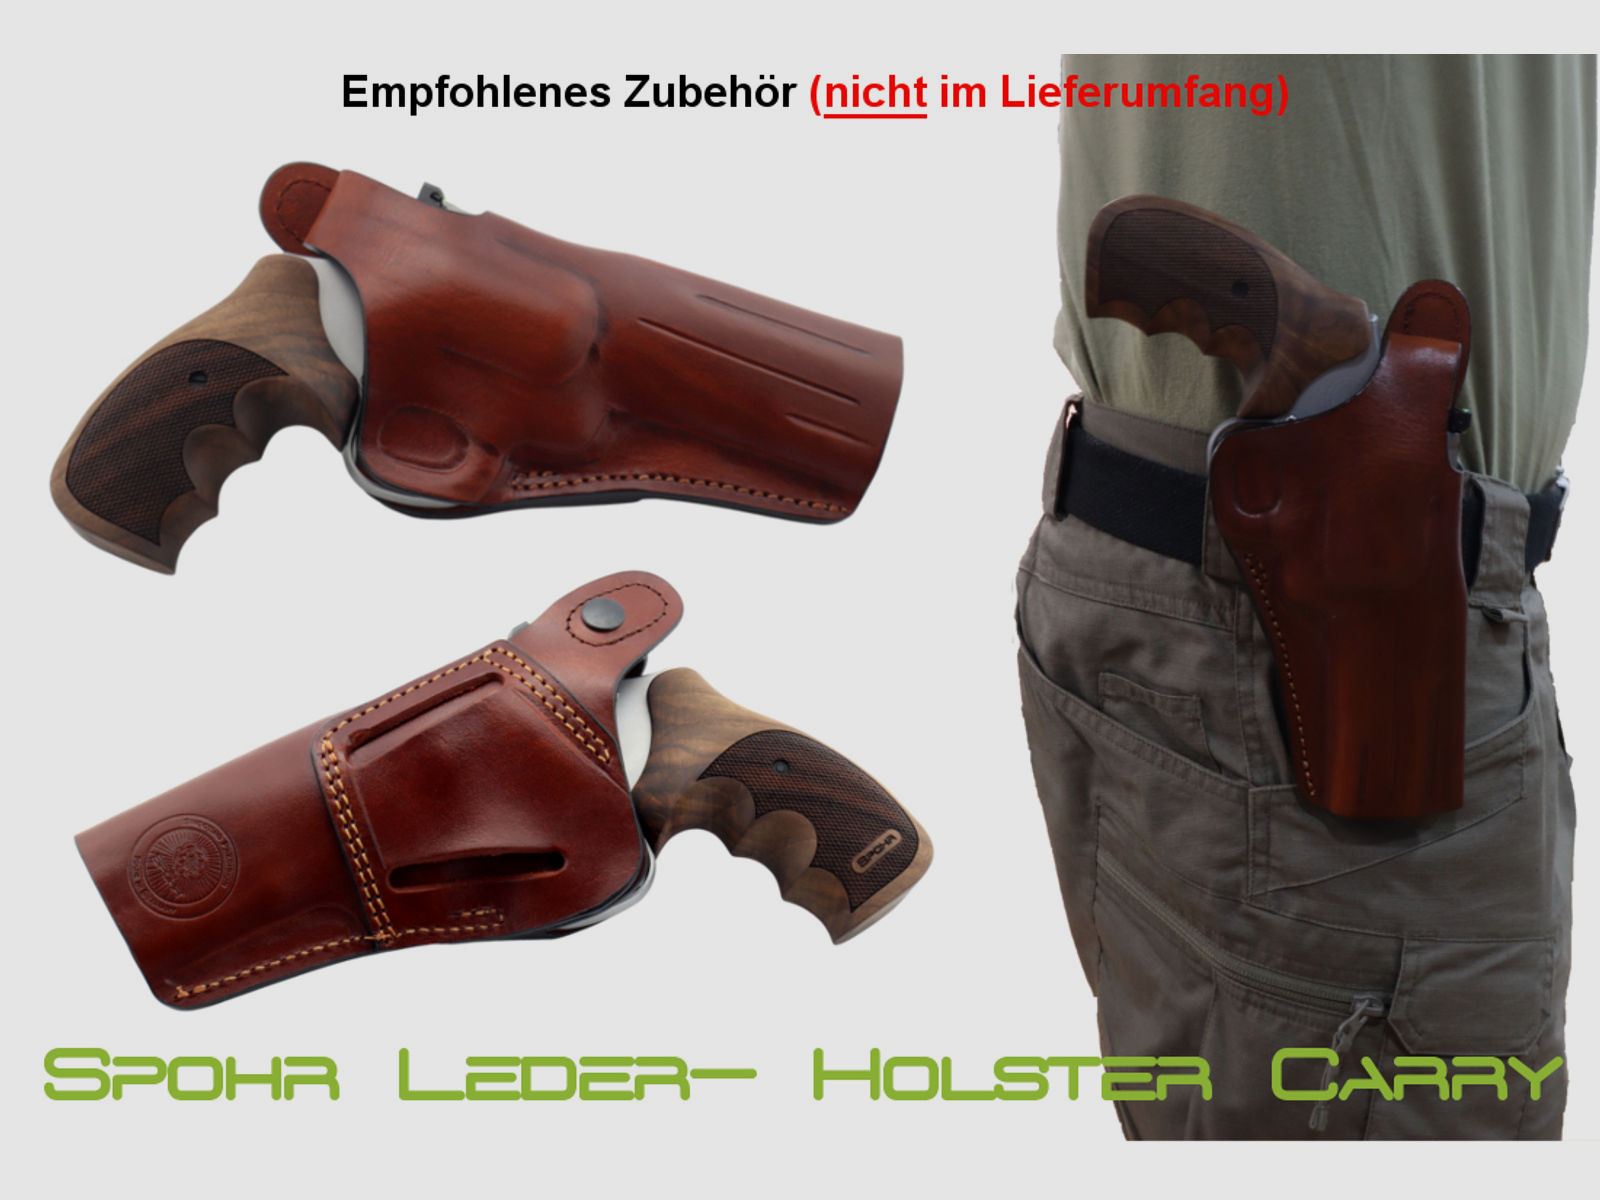 Spohr L562 Standard 4.0 Stainless 4 Zoll Revolver Jagd / Sport Made in Germany